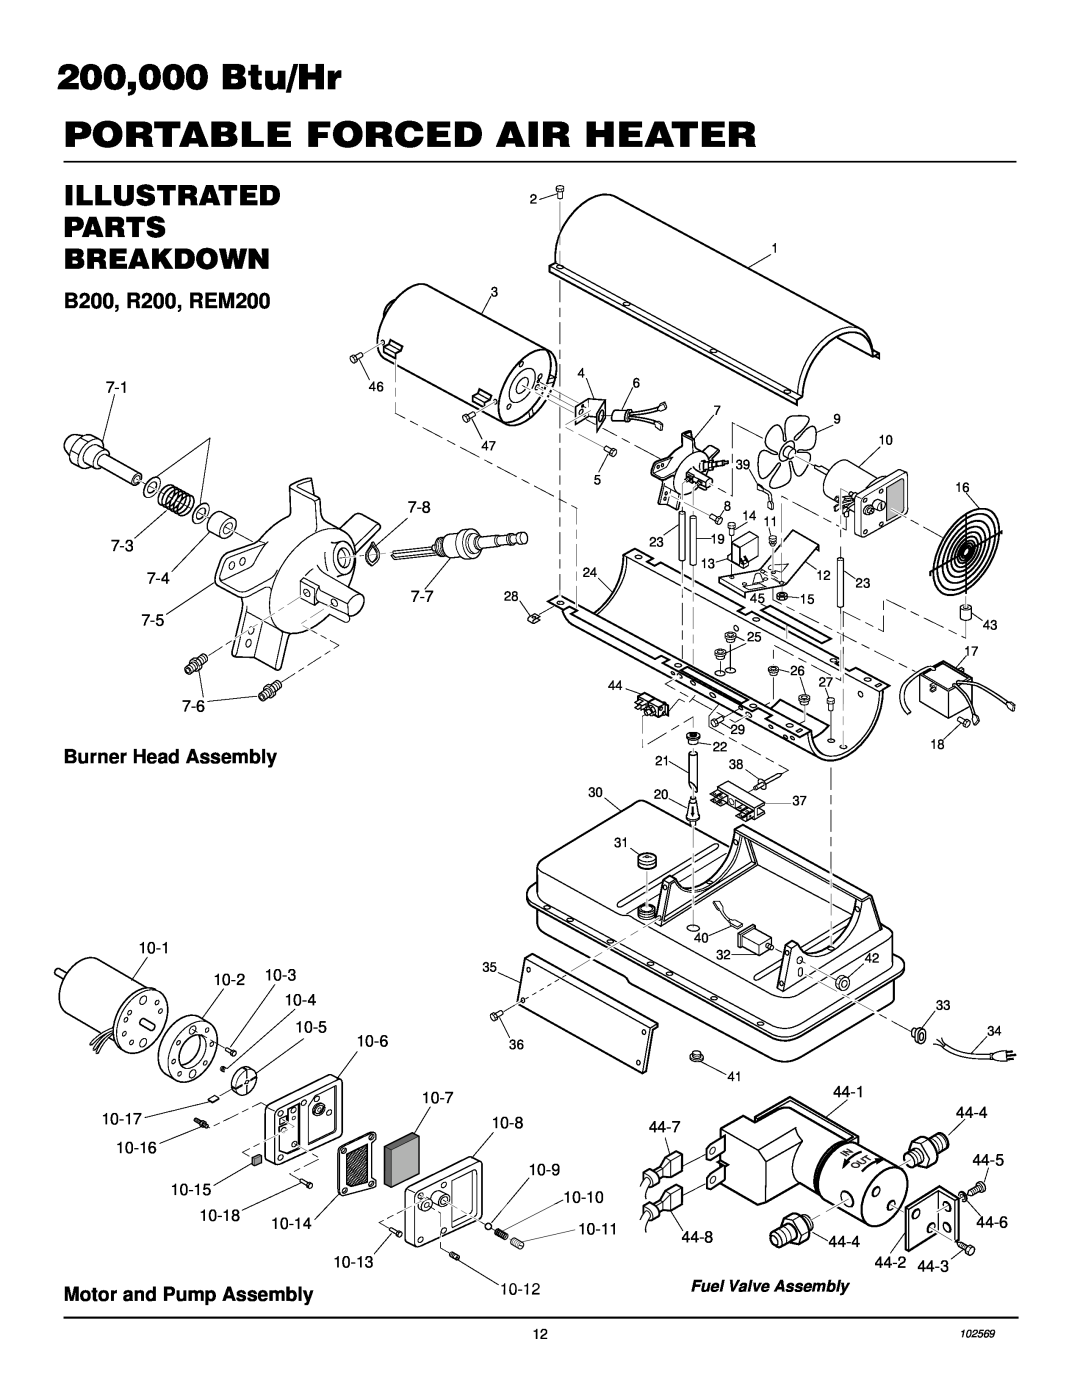 Desa owner manual Illustrated, Parts Breakdown, B200, R200, REM200, Burner Head Assembly, Motor and Pump Assembly 